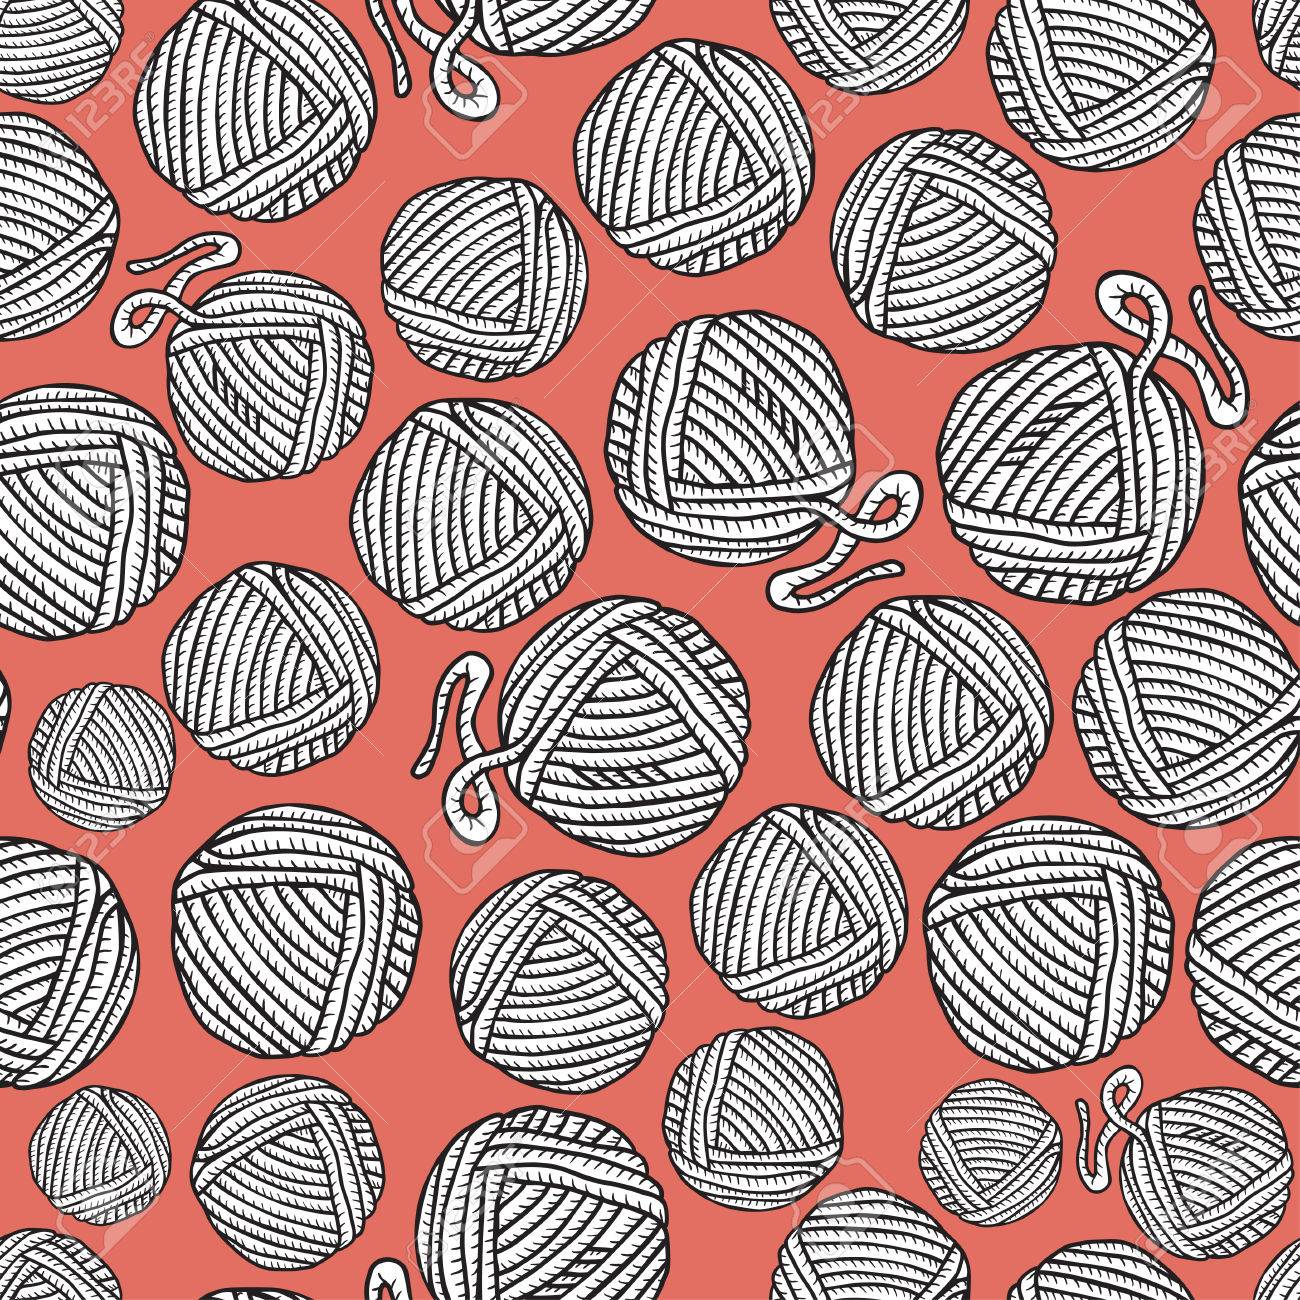 Seamless Pattern With Hand Drawn Balls Of Yarn On Orange